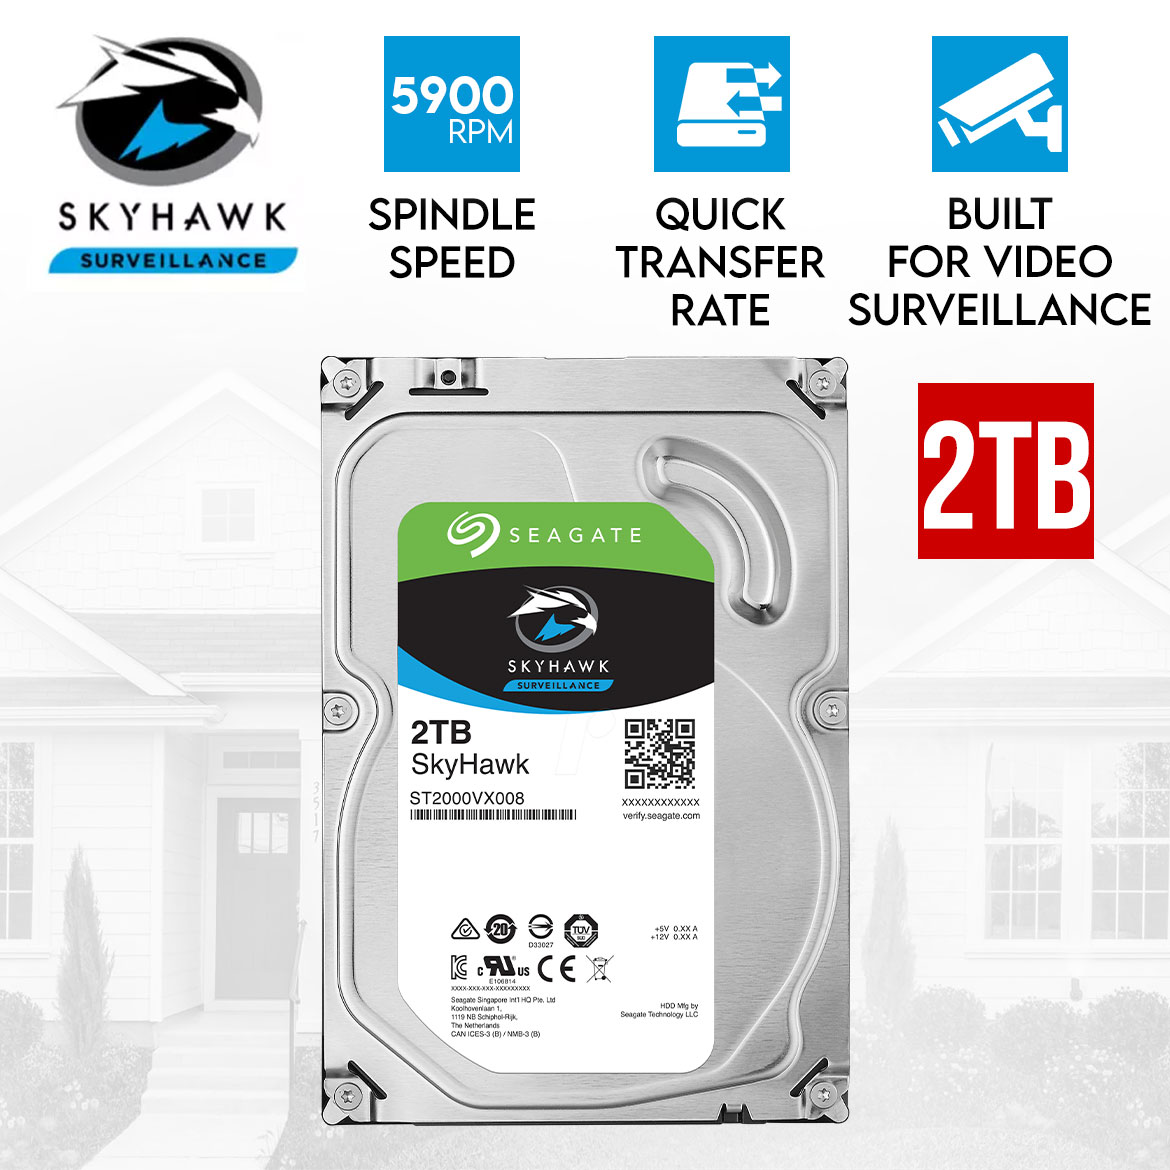 Seagate Skyhawk CCTV Surveillance 2TB 3.5